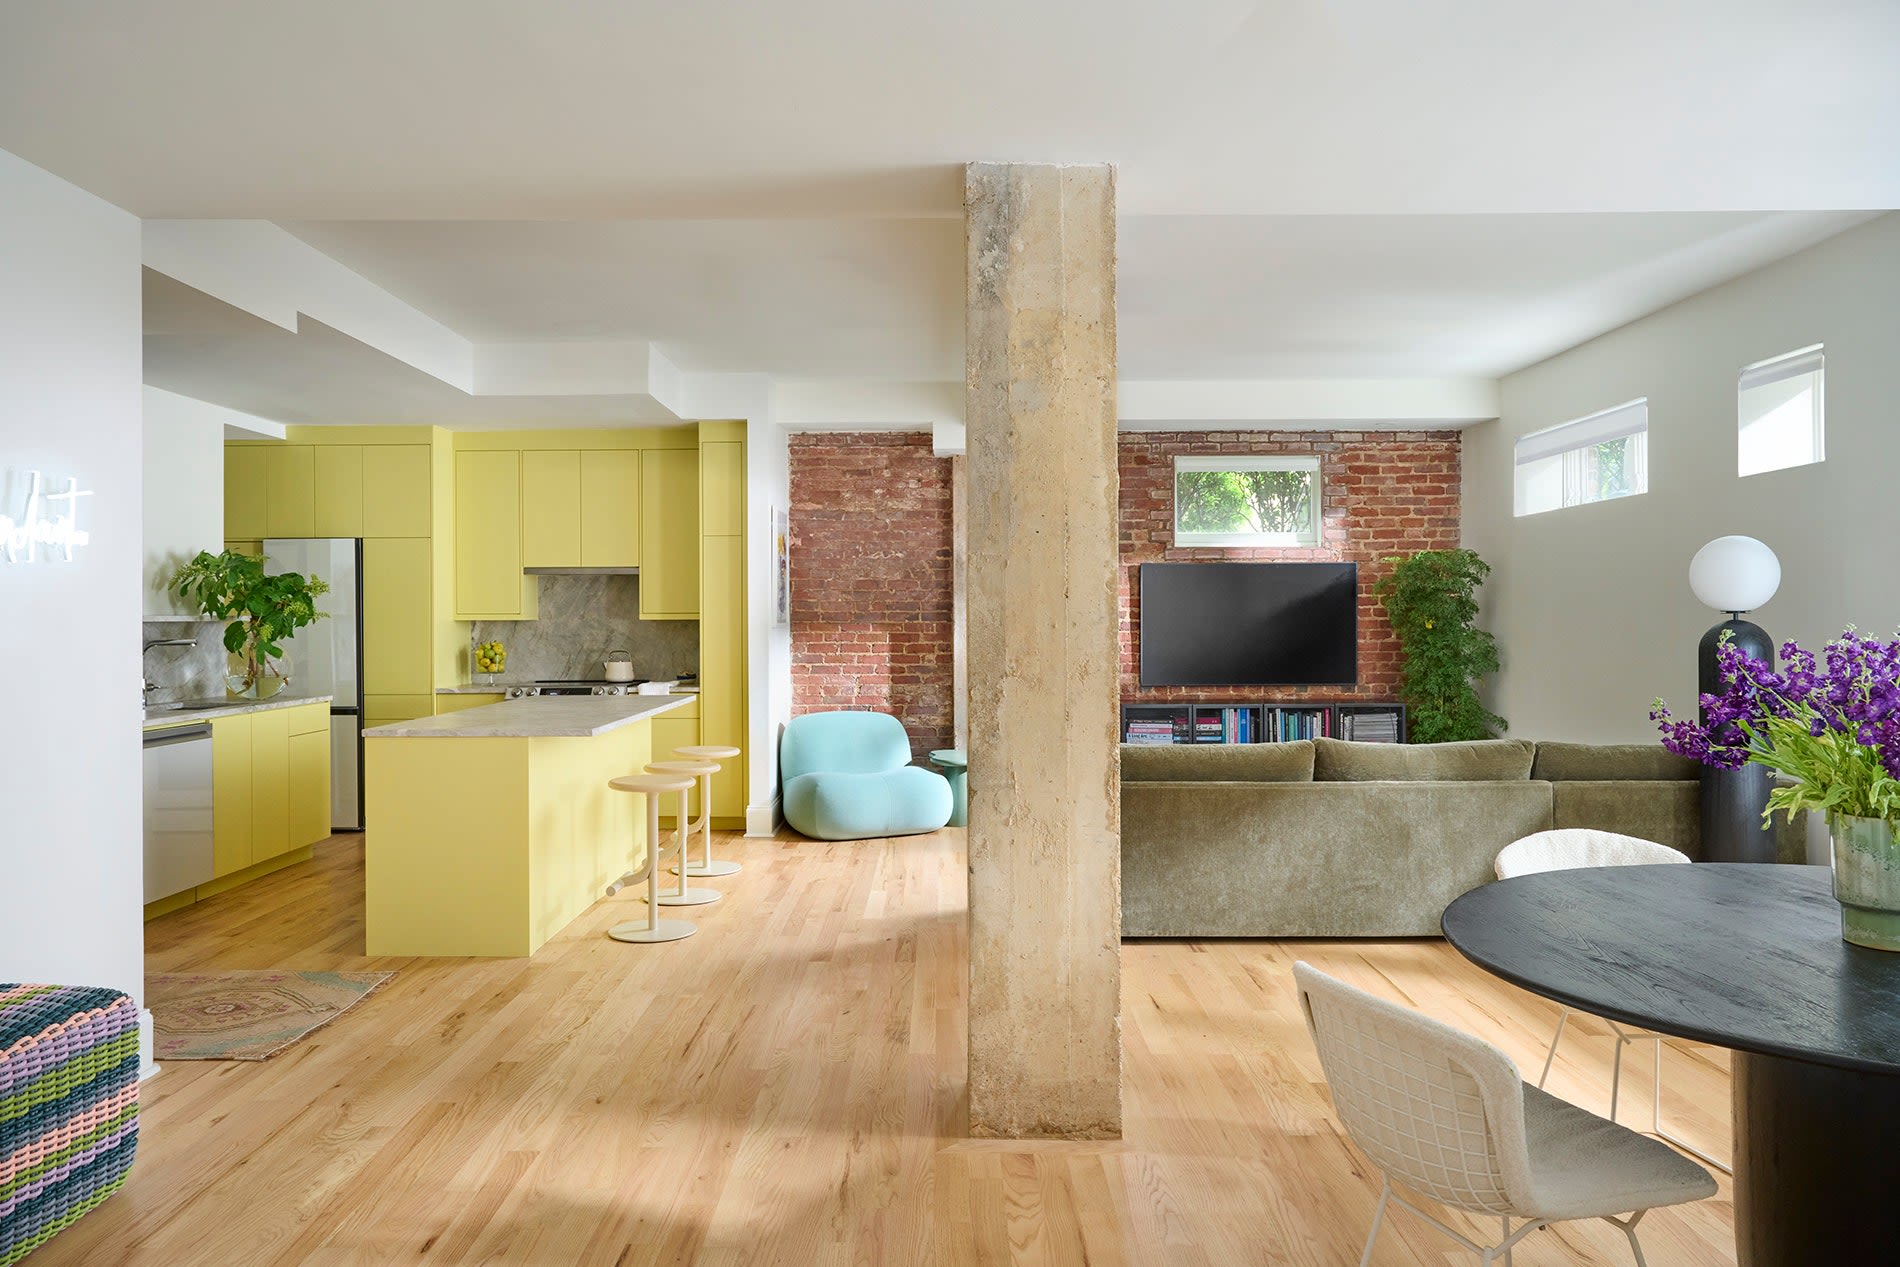 A Chartreuse Kitchen and Flamboyant Wallpaper Enliven This Atlanta Apartment